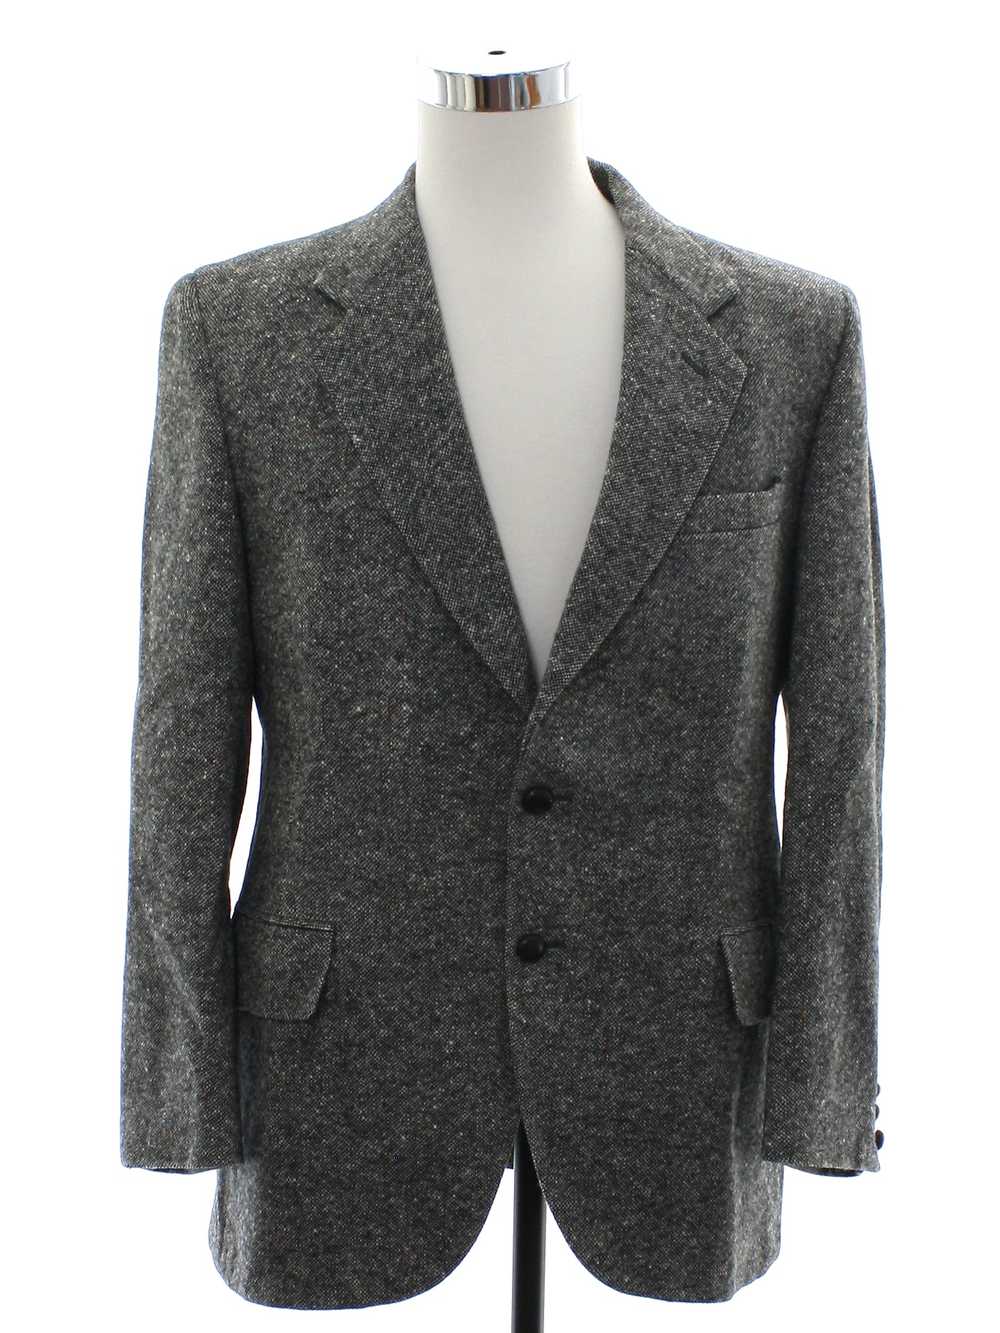 1980's Kuppenheimer Yorkshire Tweed Made in Engla… - image 1